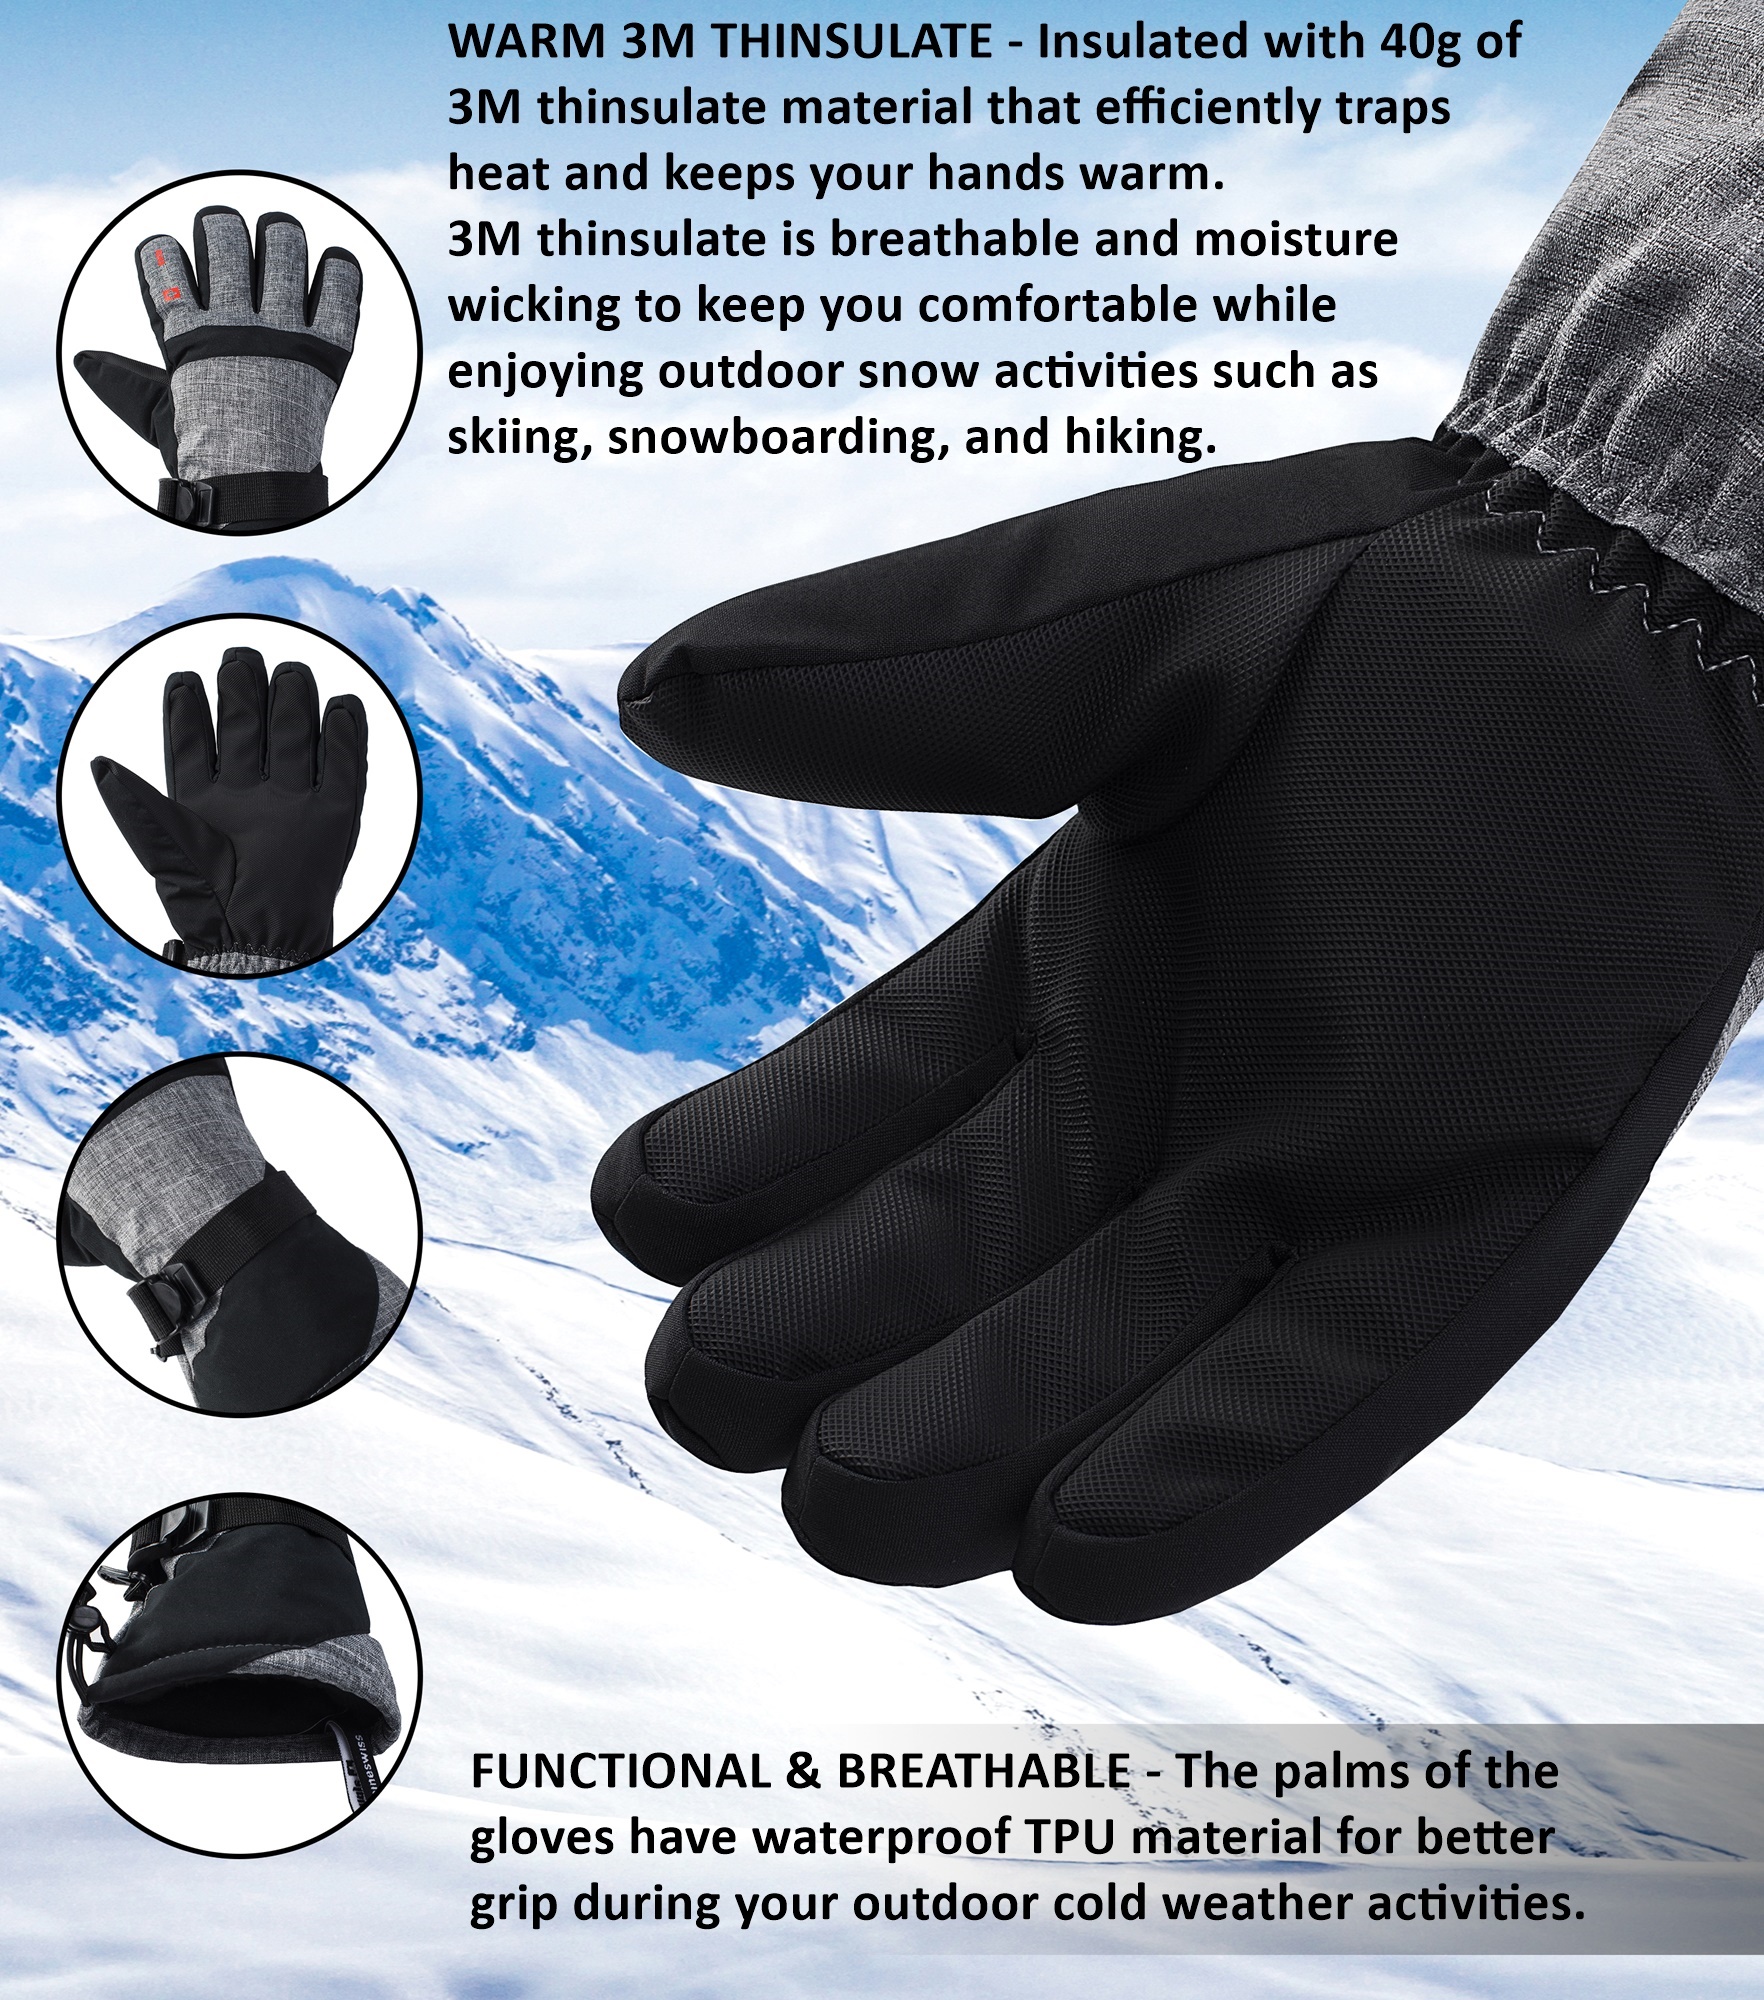 Alpine Swiss Mens Waterproof Gauntlet Snow Ski Gloves Winter Sport Snowboarding Windproof Warm 3M Thinsulate - image 3 of 7